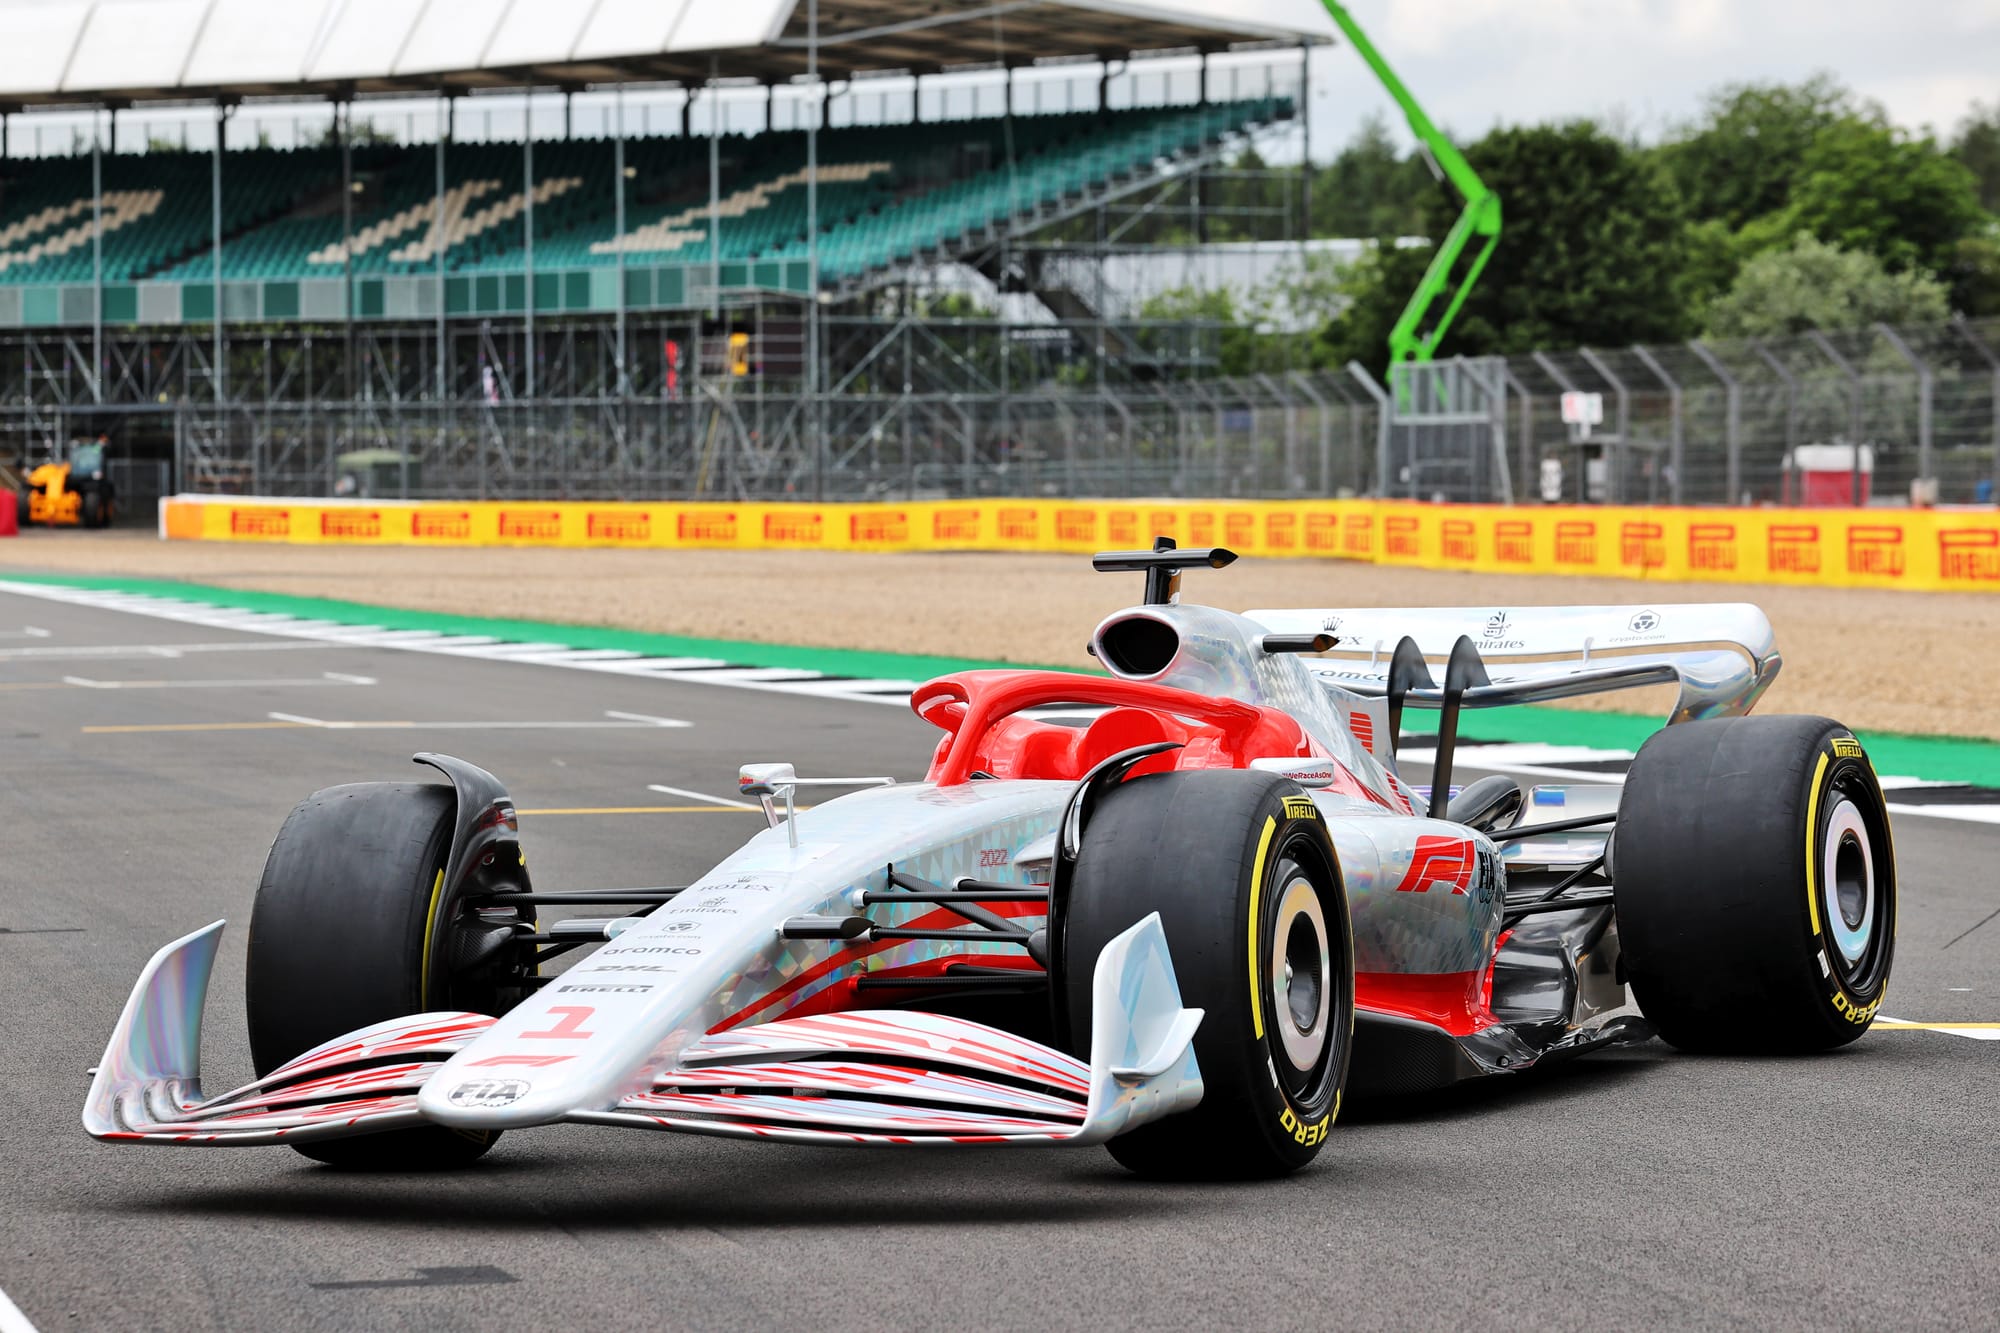 F1 2022 rules show car in 2021